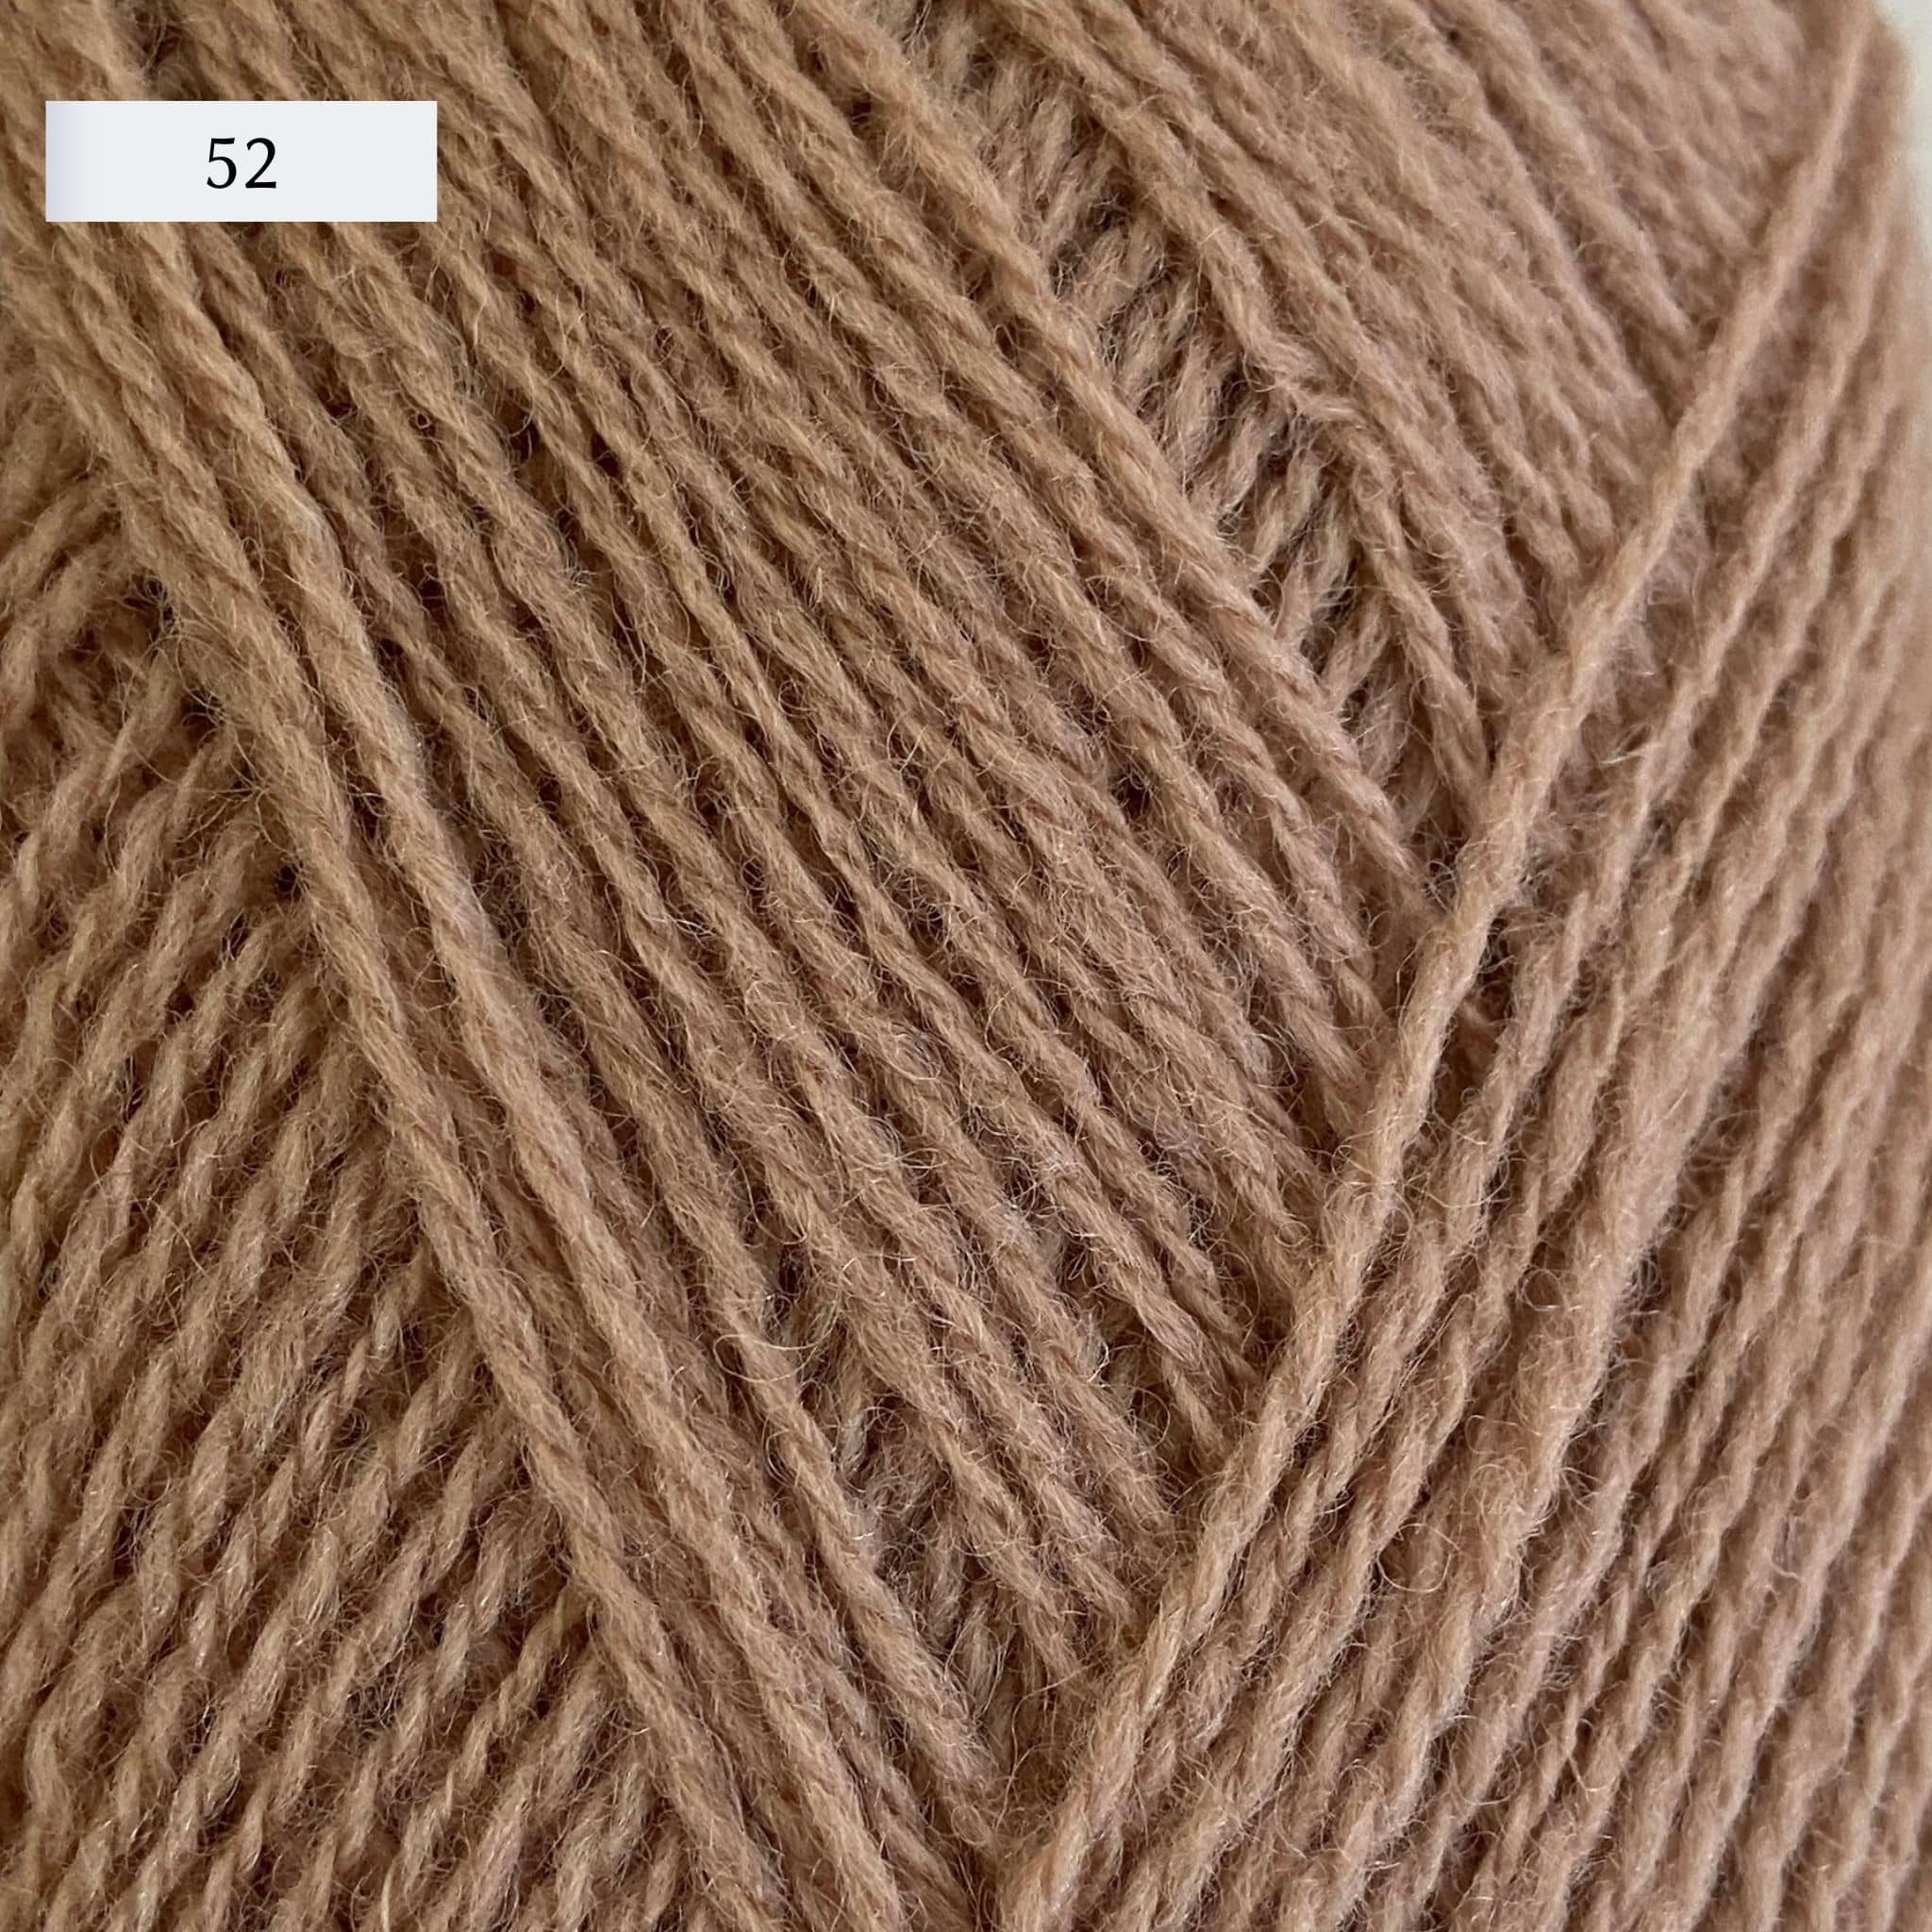 Rauma Lamullgarn, a fingering weight yarn, in color 52, a camel tan